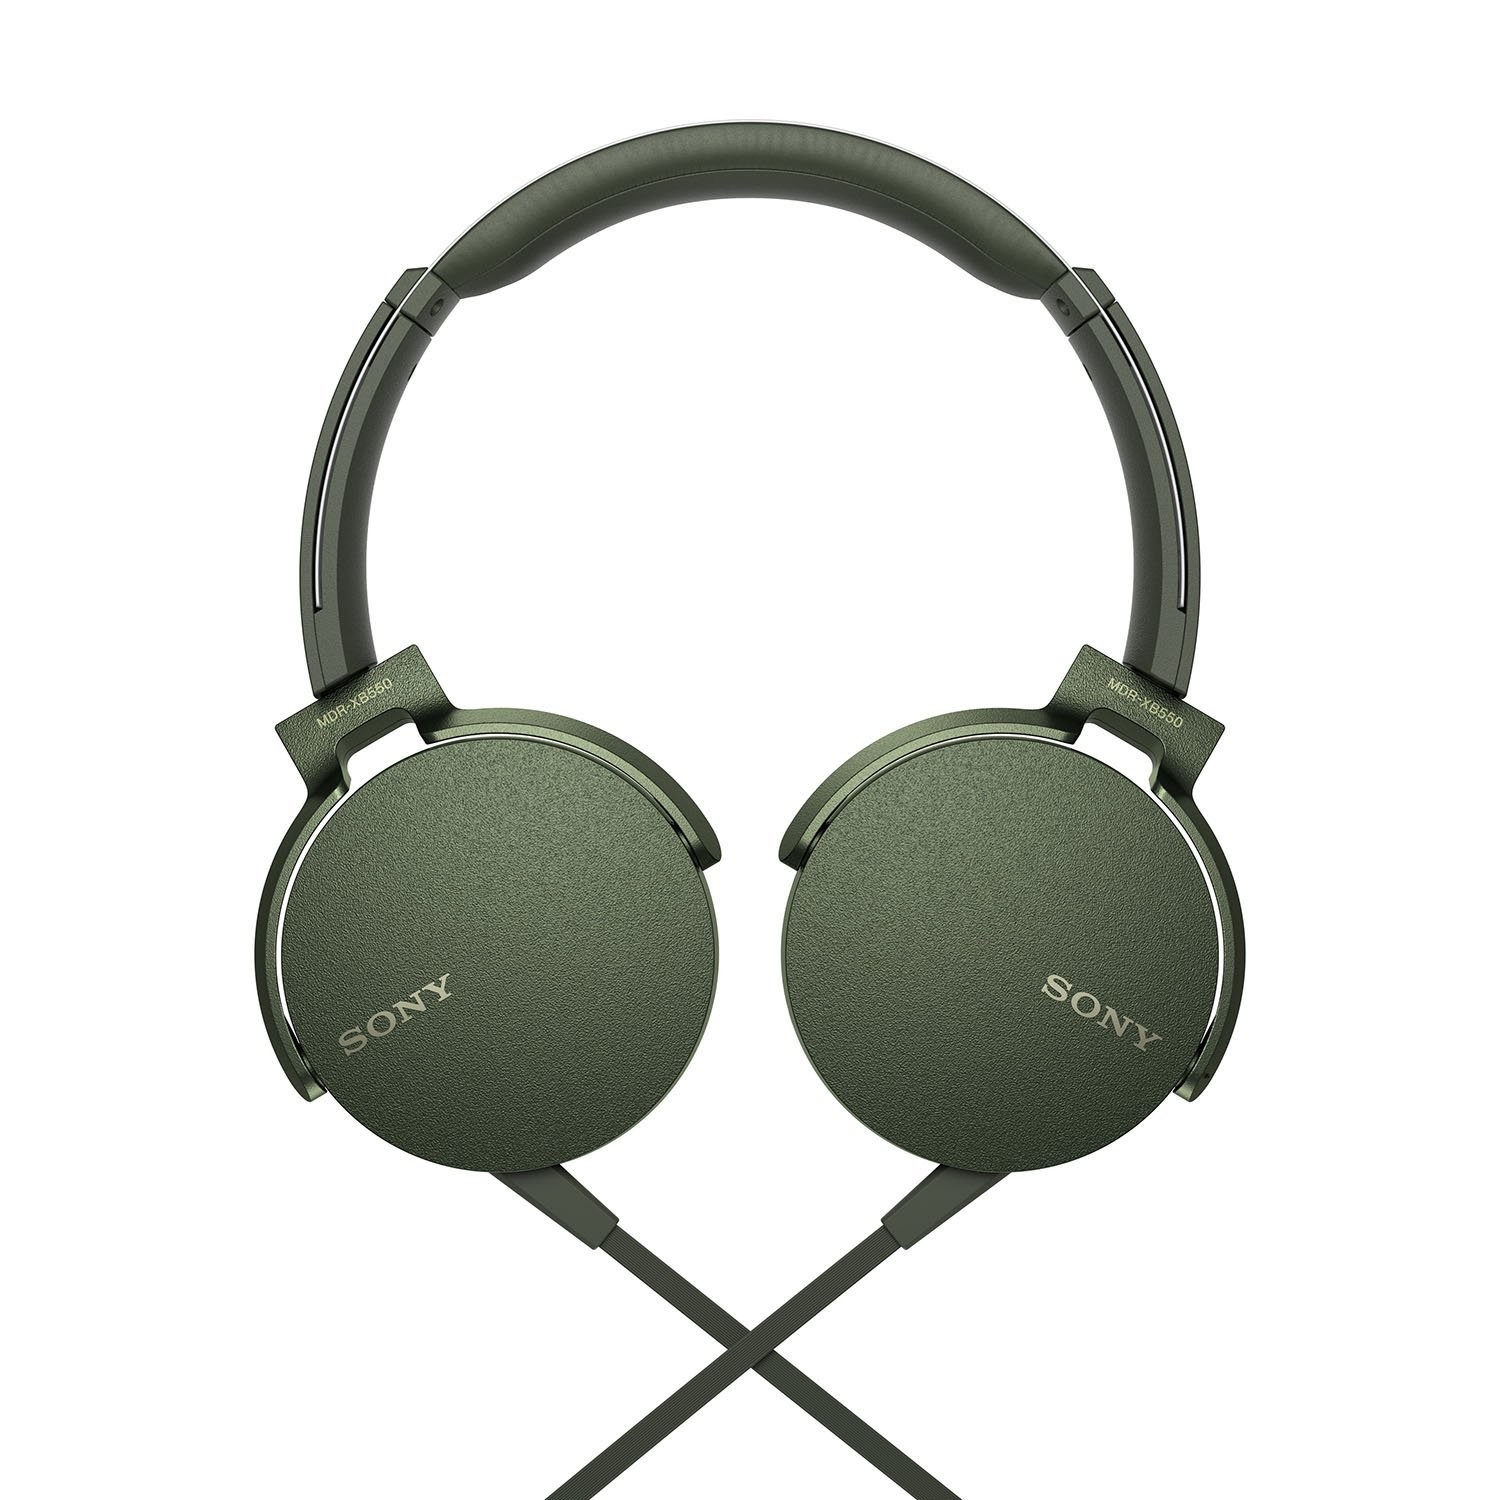 Sony Extra Bass MDR-XB550AP On-Ear Headphones, Green